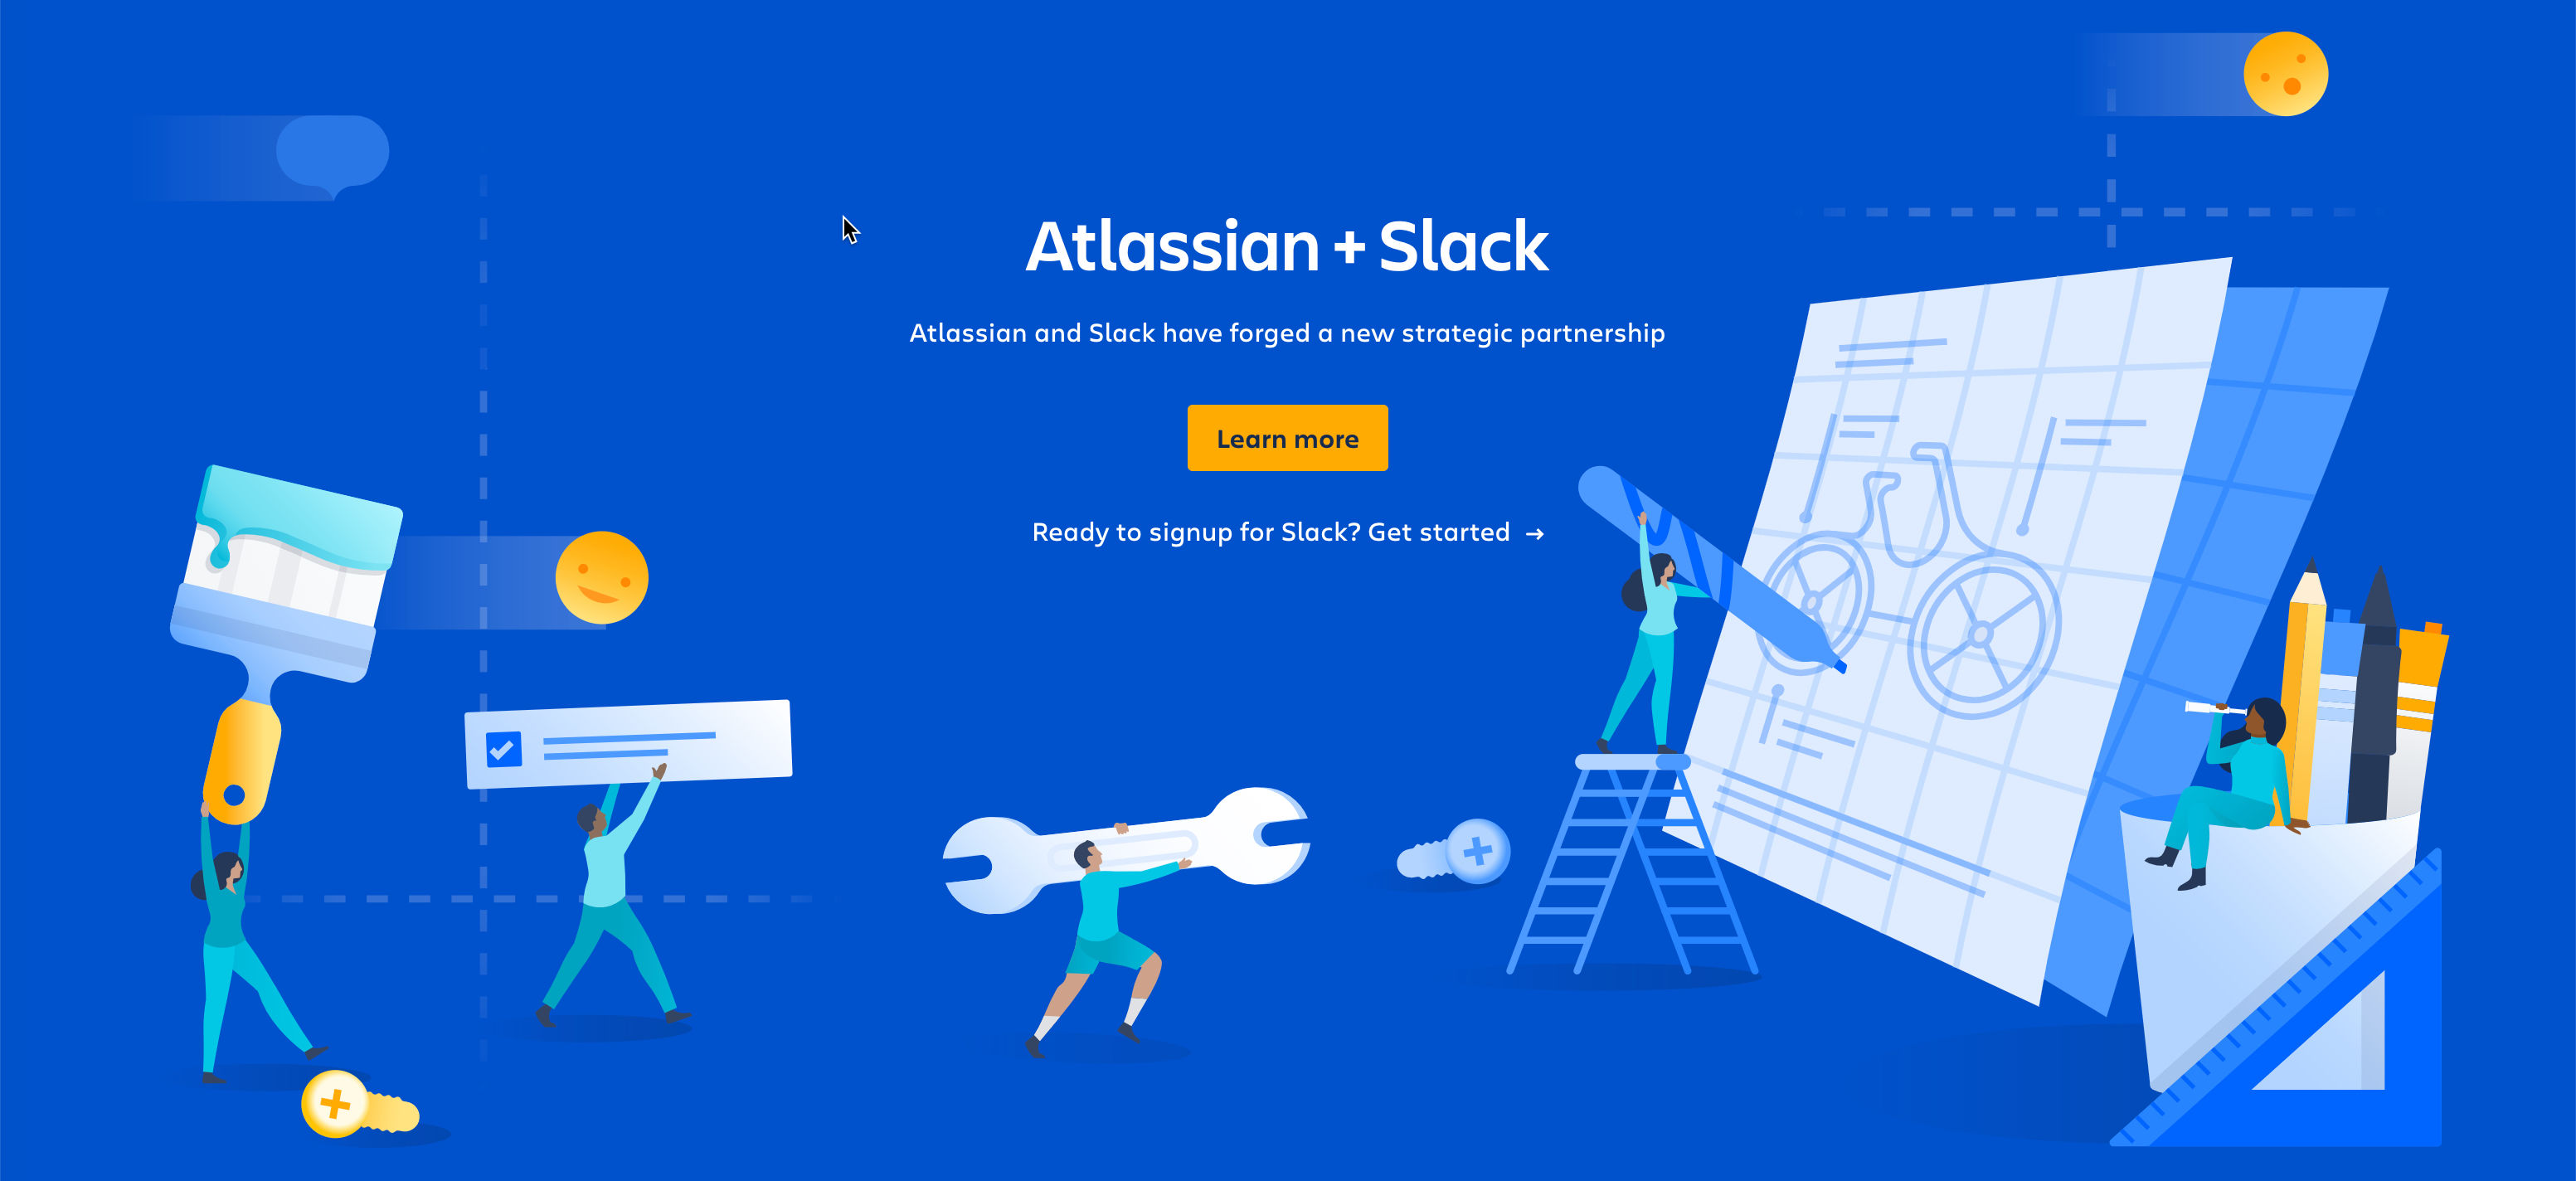 Https atlassian net. Картинка Atlassian. Компания Atlassian фото рекламное. Модели сетевой безопасности Stride. Atlassian poster.